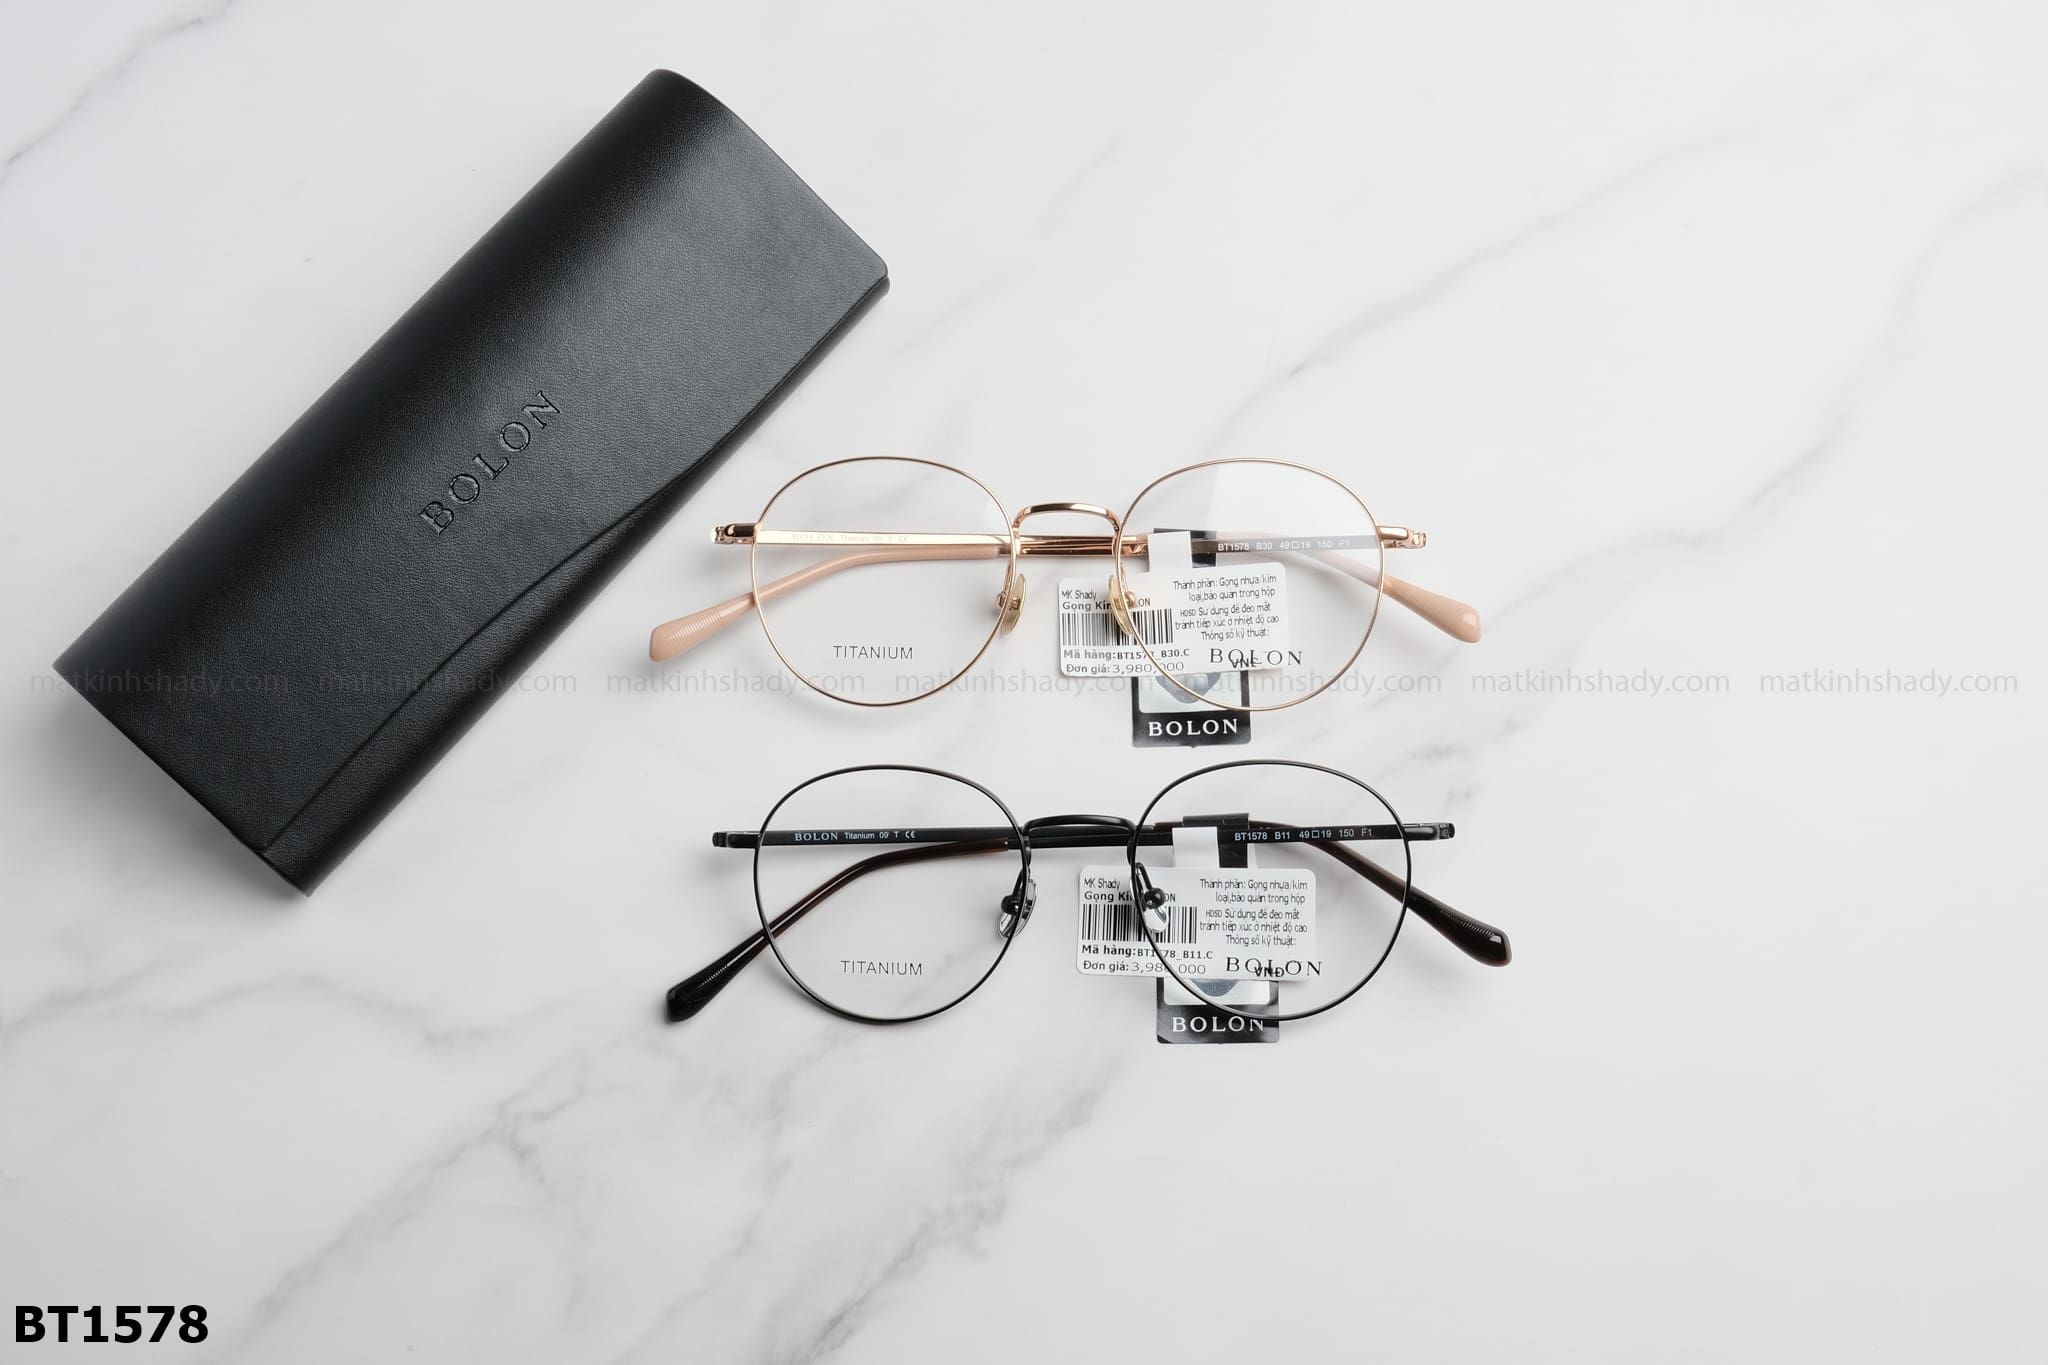  Bolon Eyewear - Glasses - BT1578 